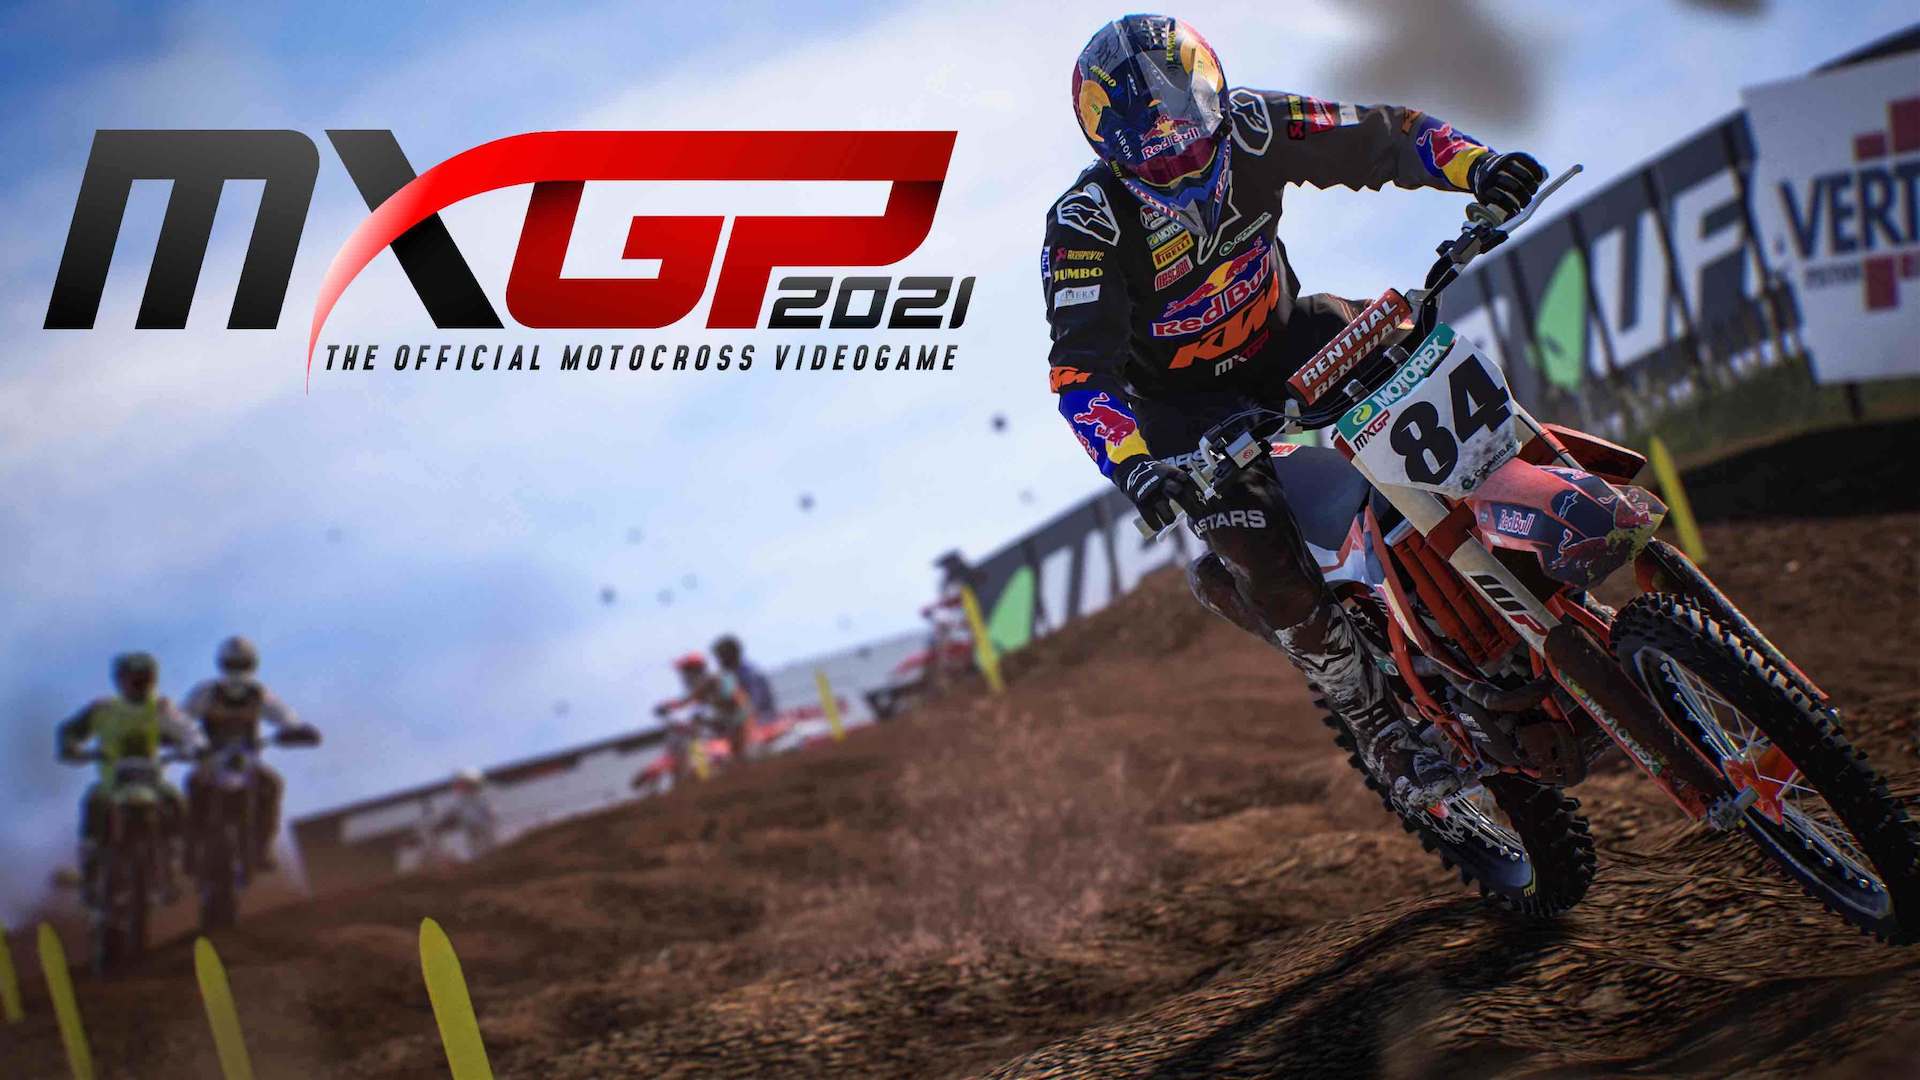 Vuelve el Mundial de Motocross, Milestone anuncia MXGP 2021 - AllGamersIn